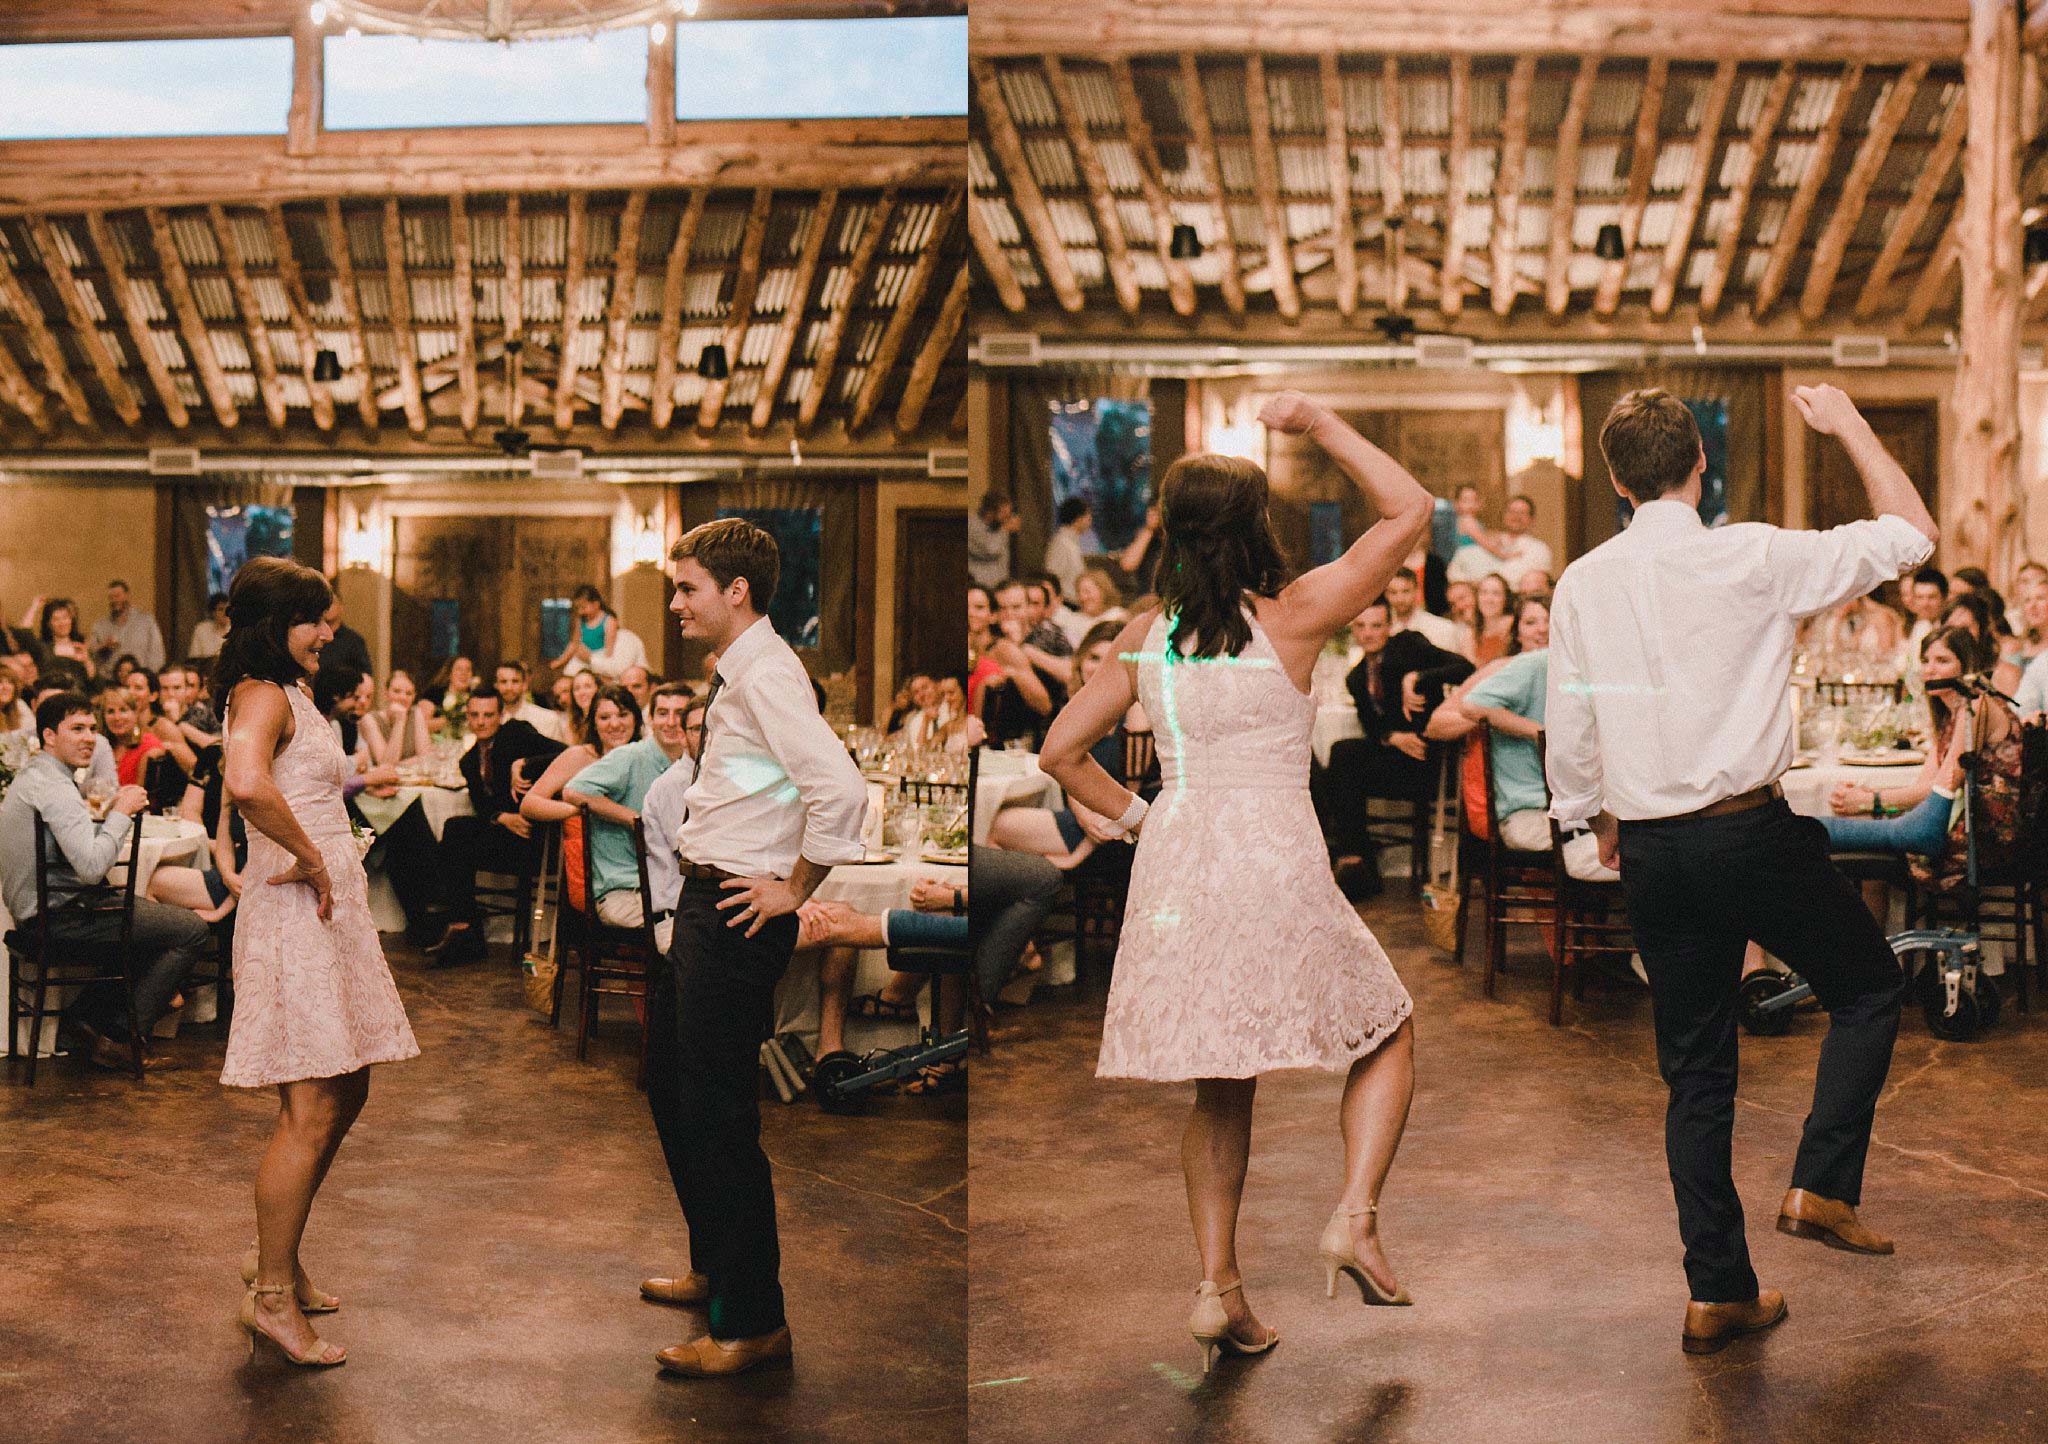 Groom and mom dancing at rustic wedding venue